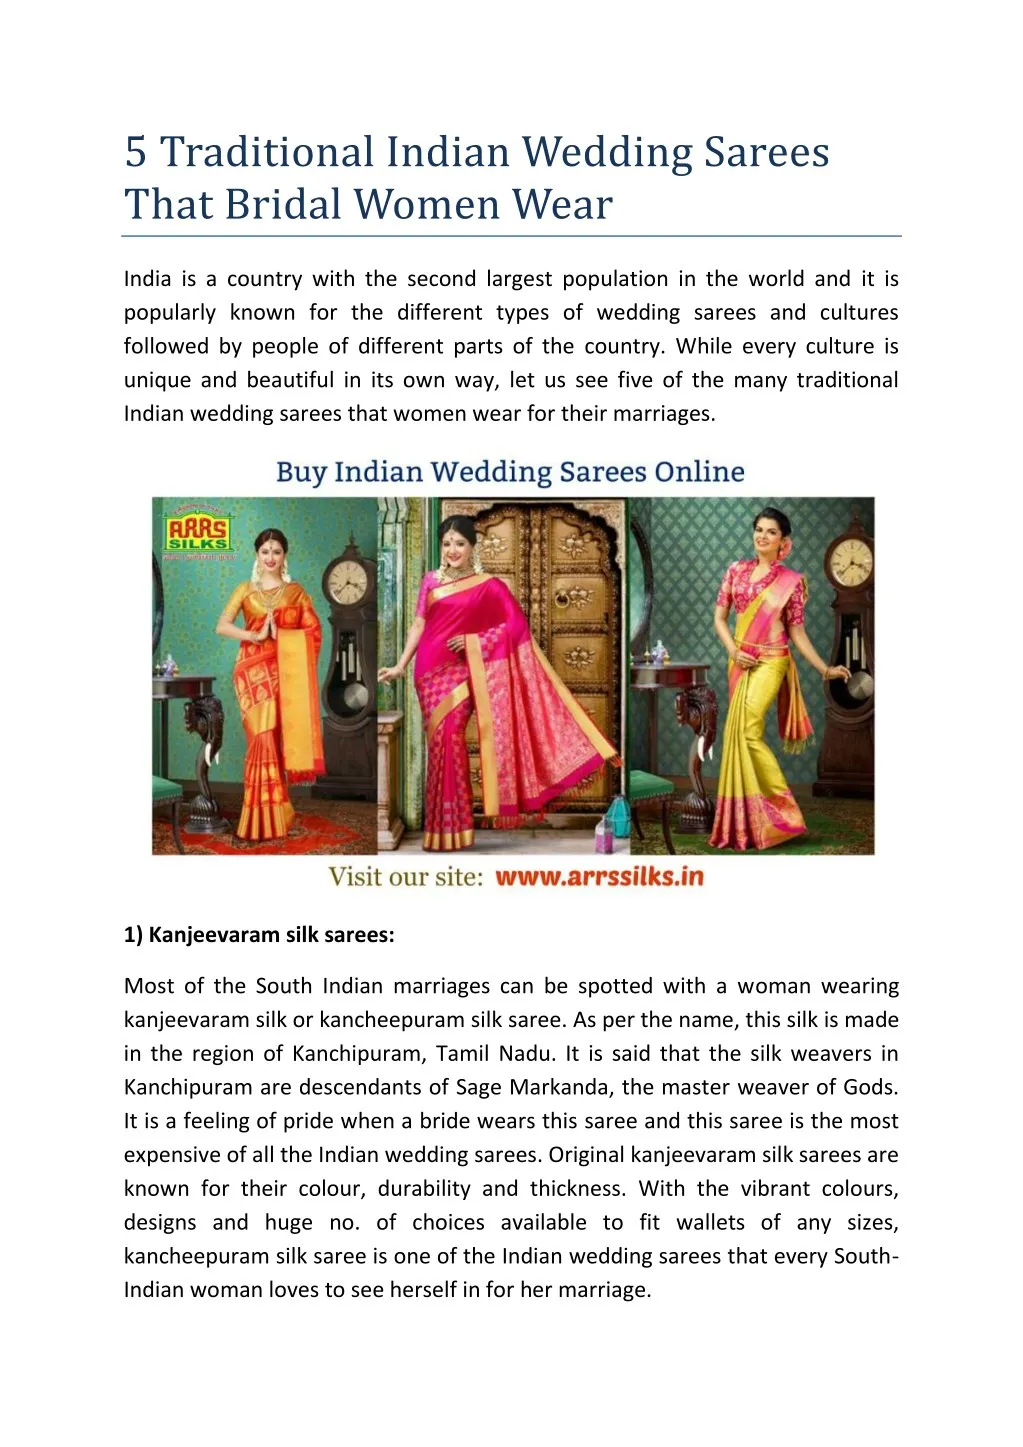 5 traditional indian wedding sarees that bridal